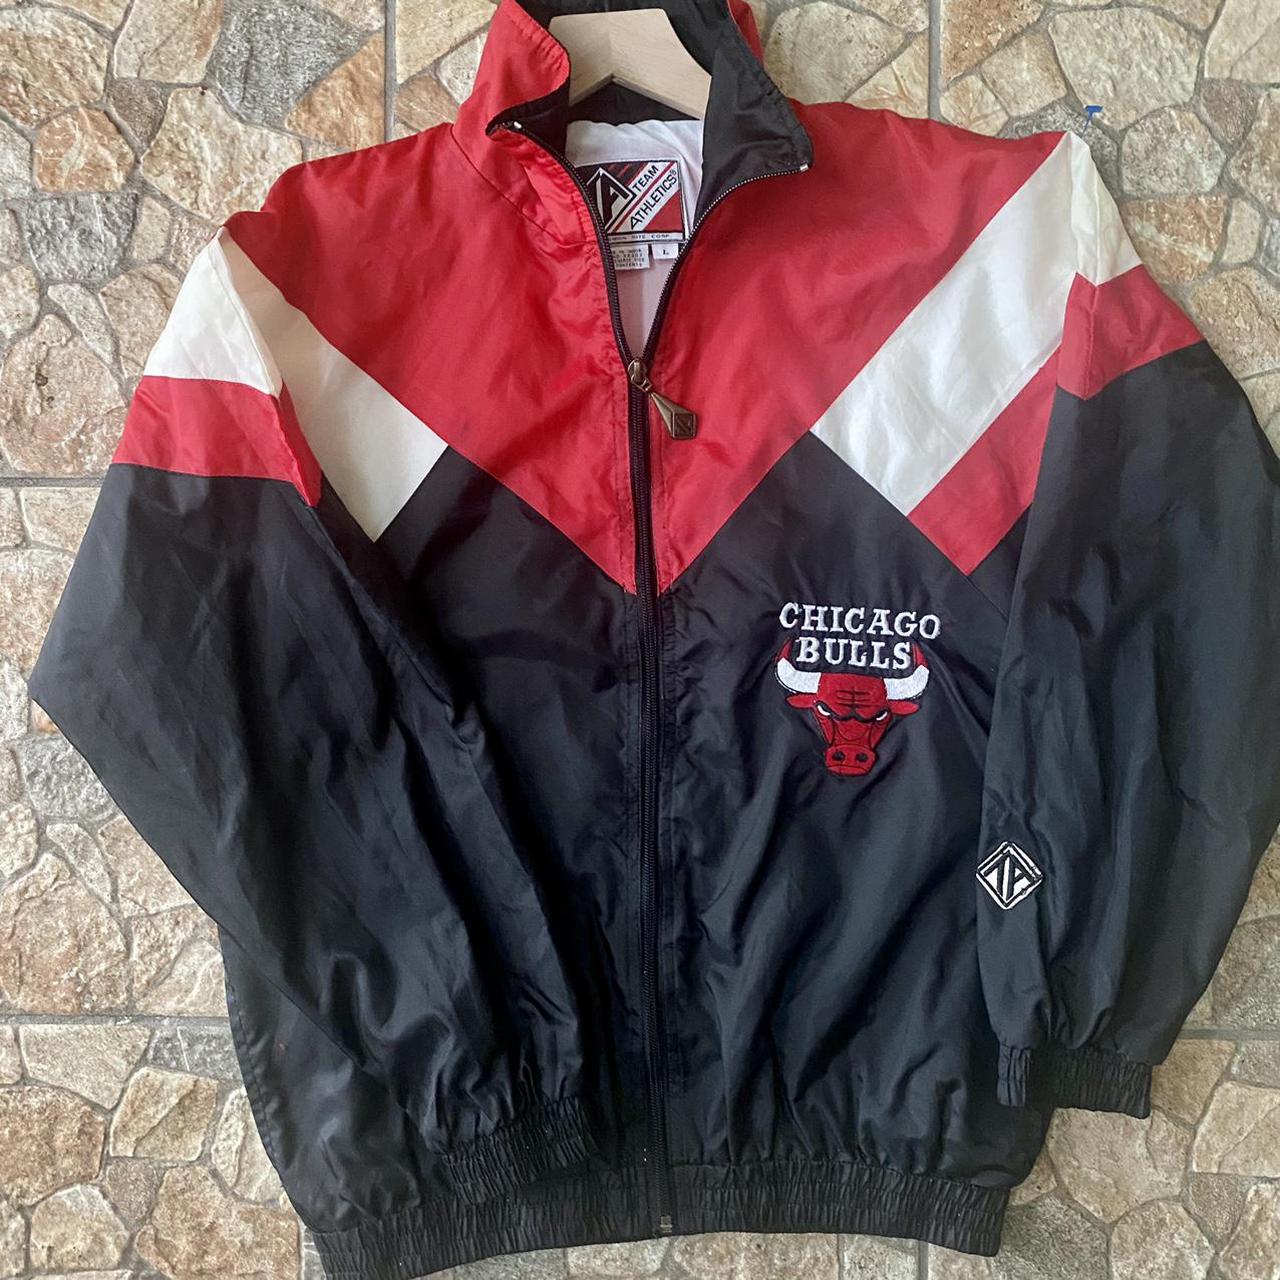 Vintage Chicago Bulls Basketball Windbreaker Jacket Starter 